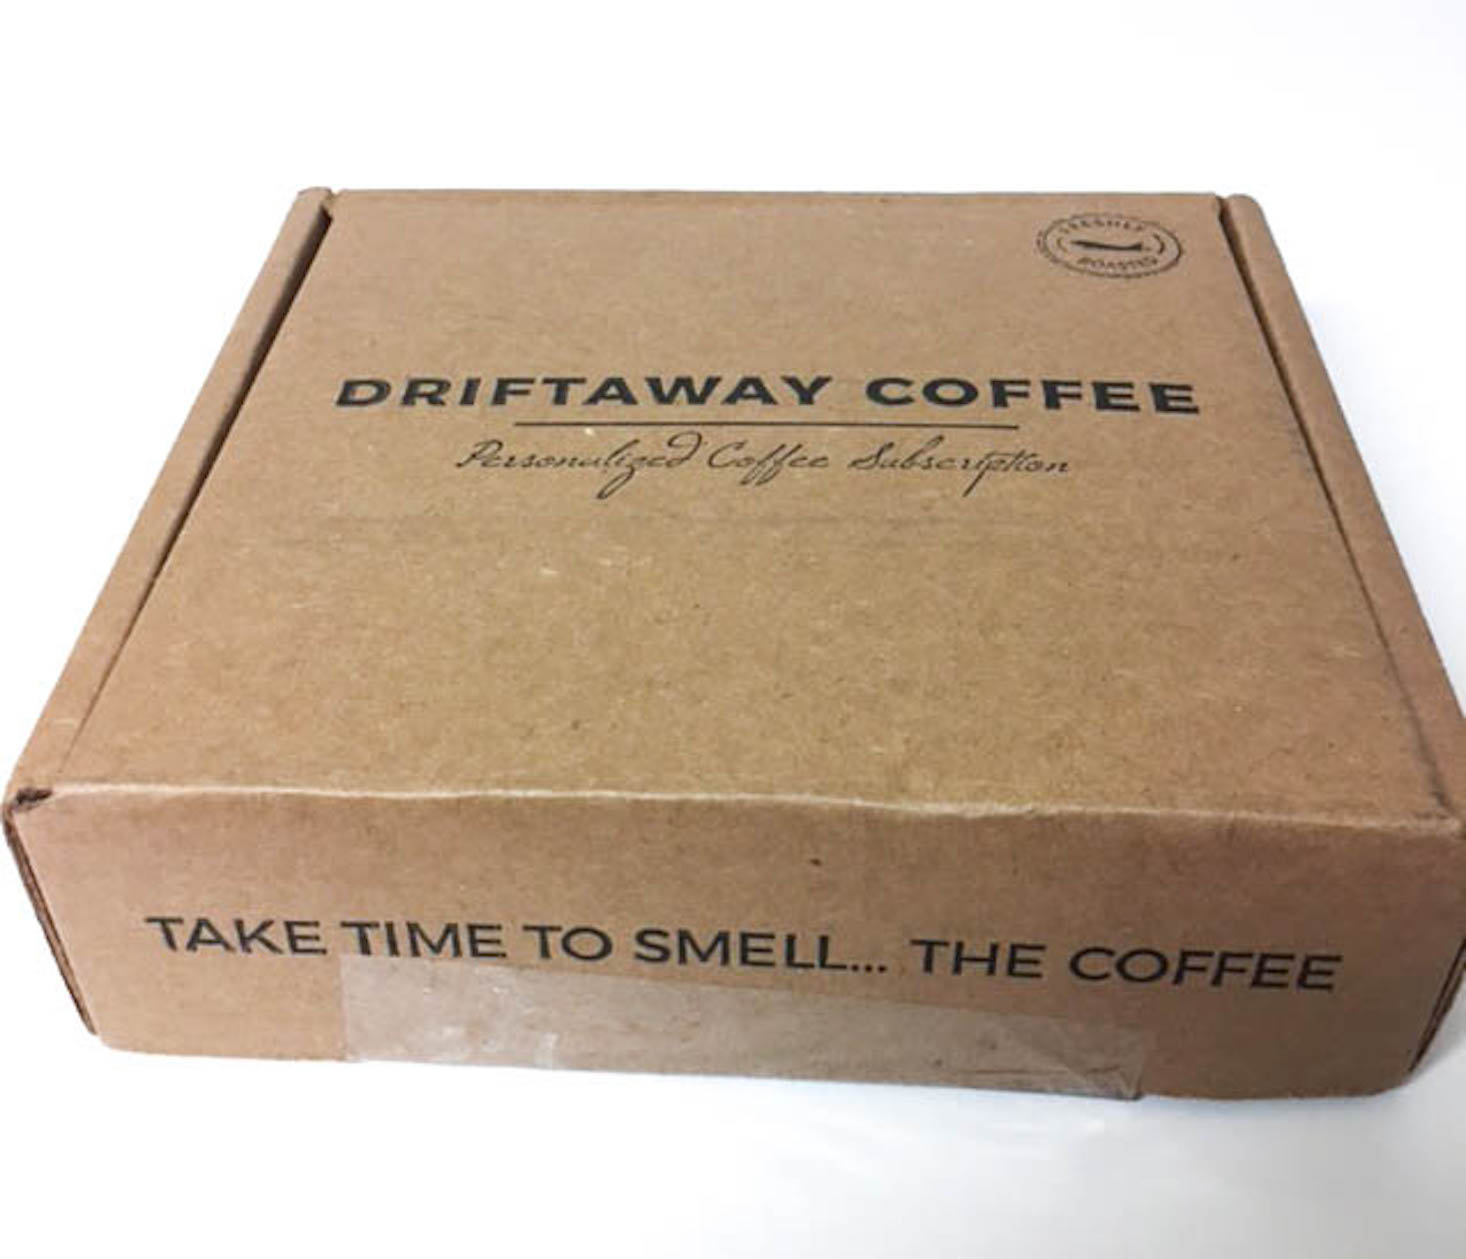 Driftaway Coffee Box Review + Coupon – February 2018